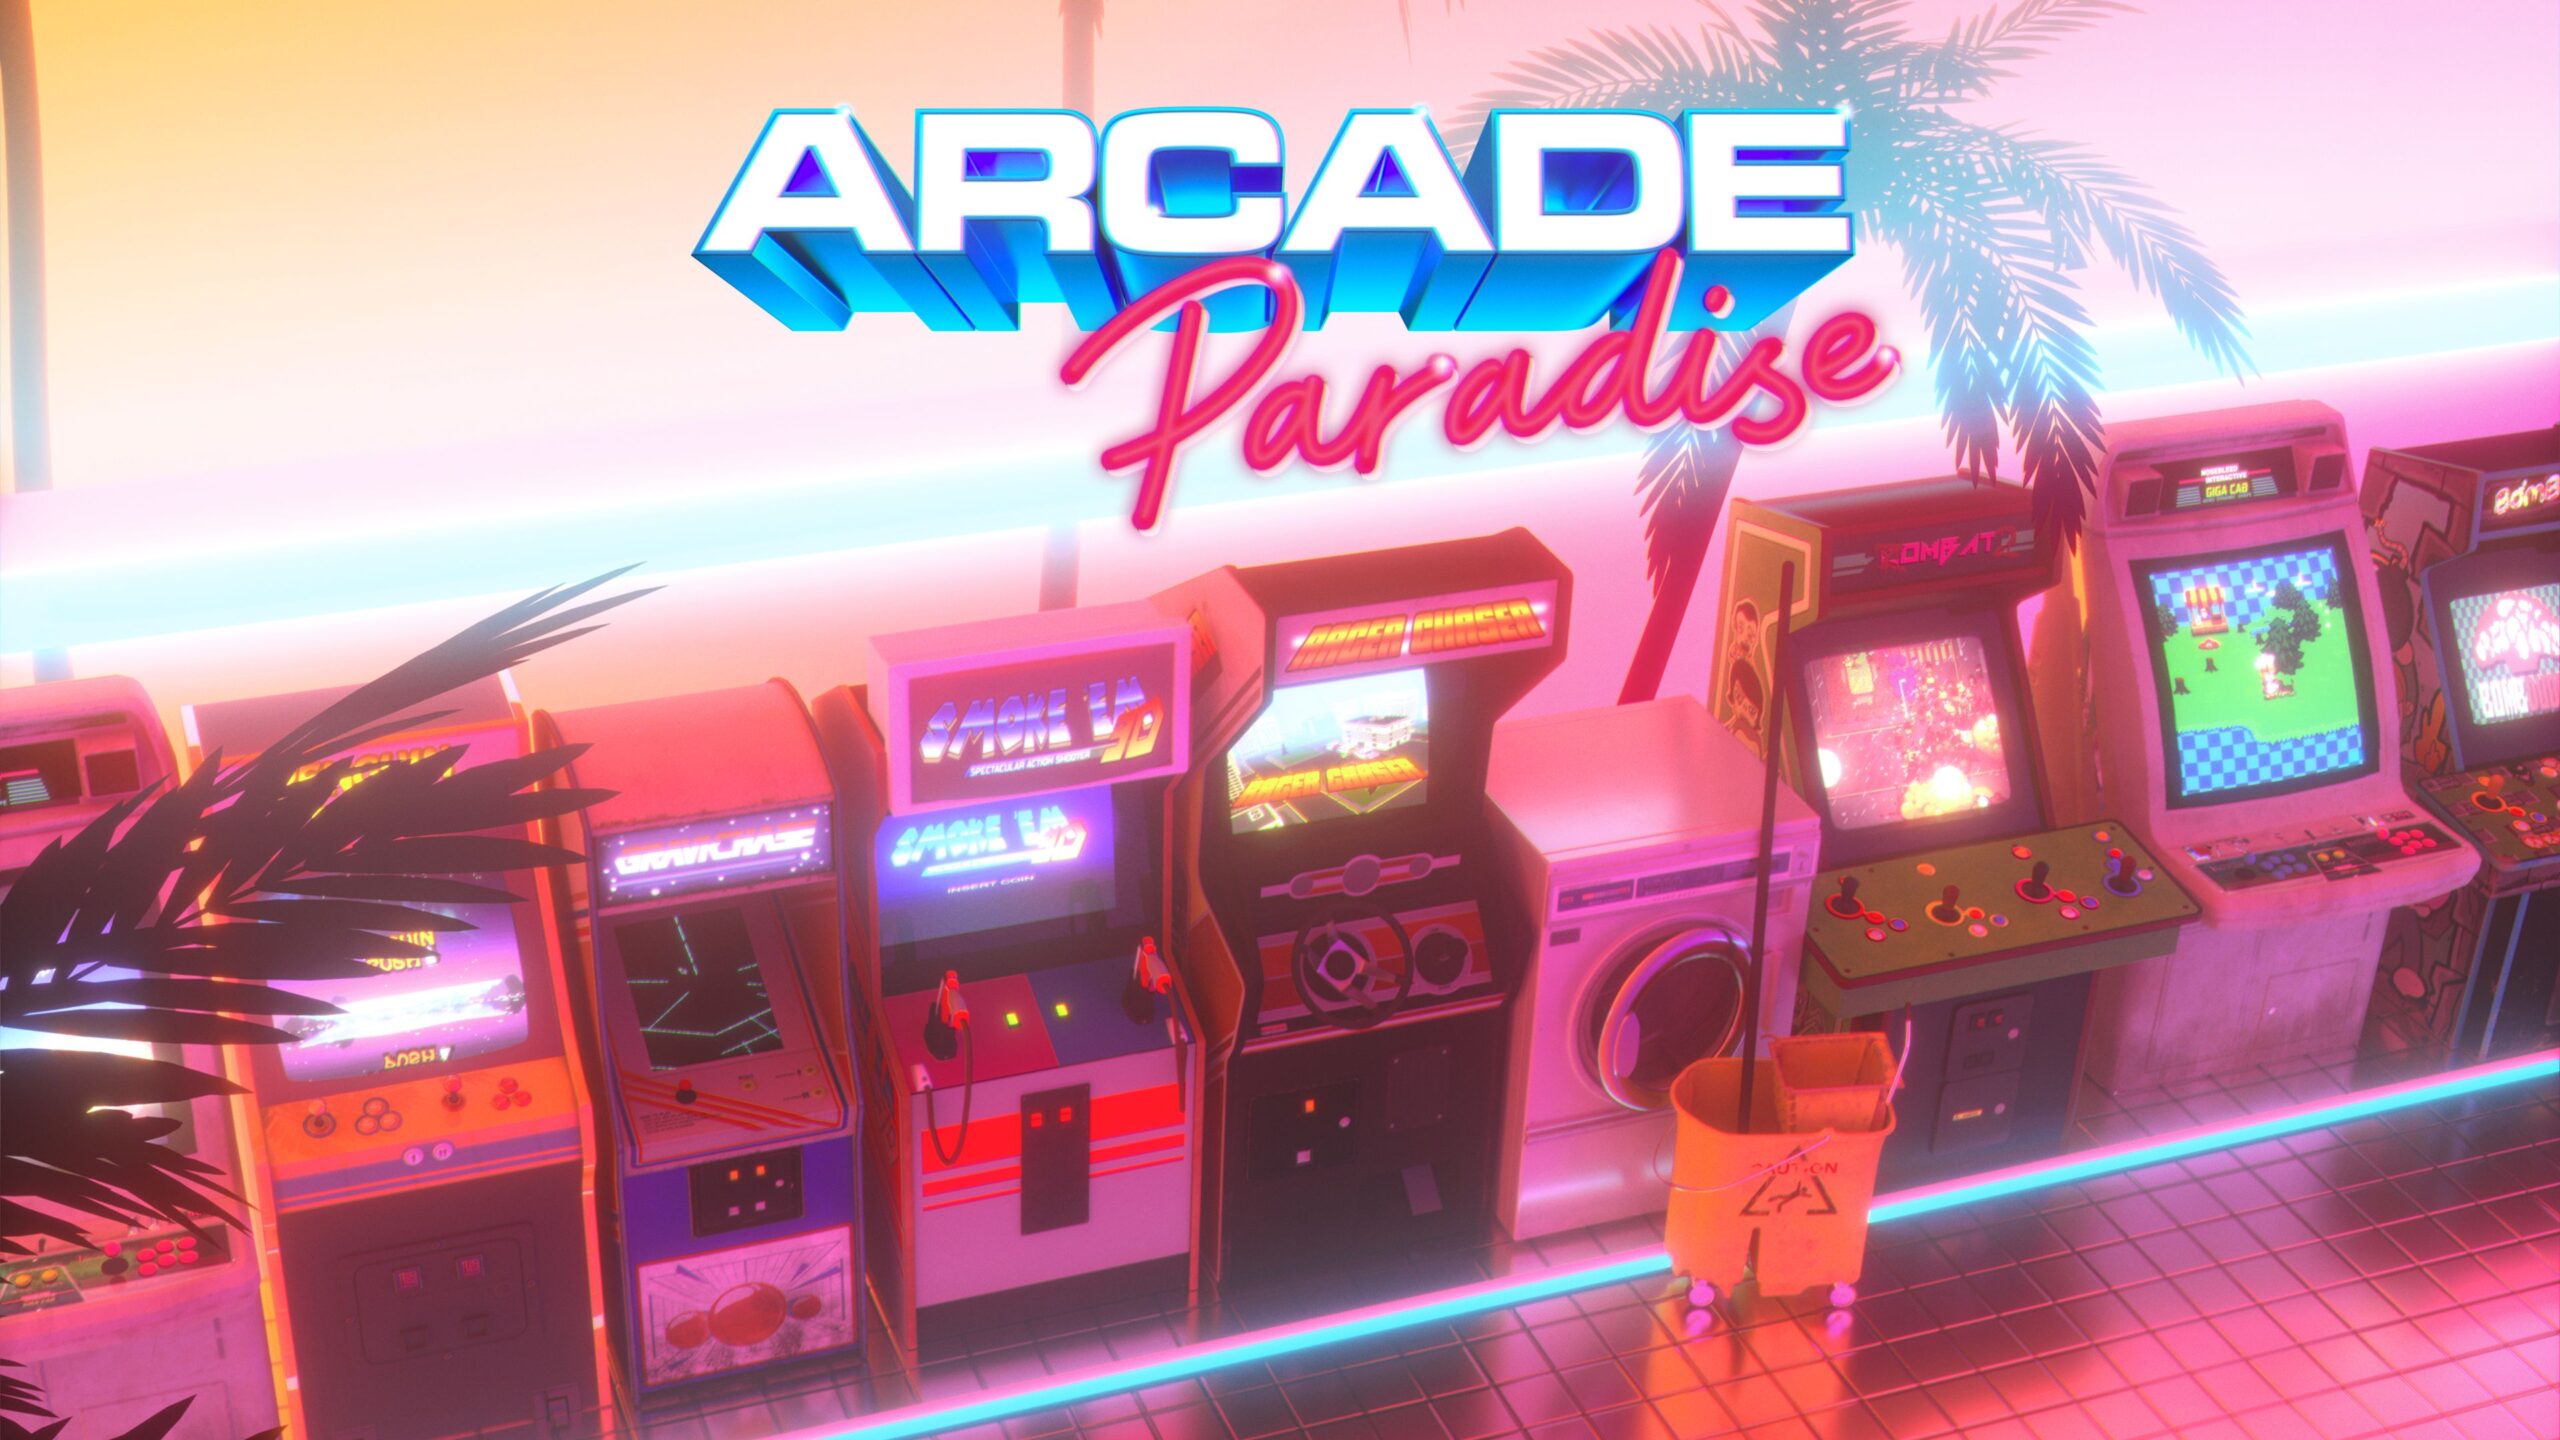 Arcade Management Game Arcade Paradise